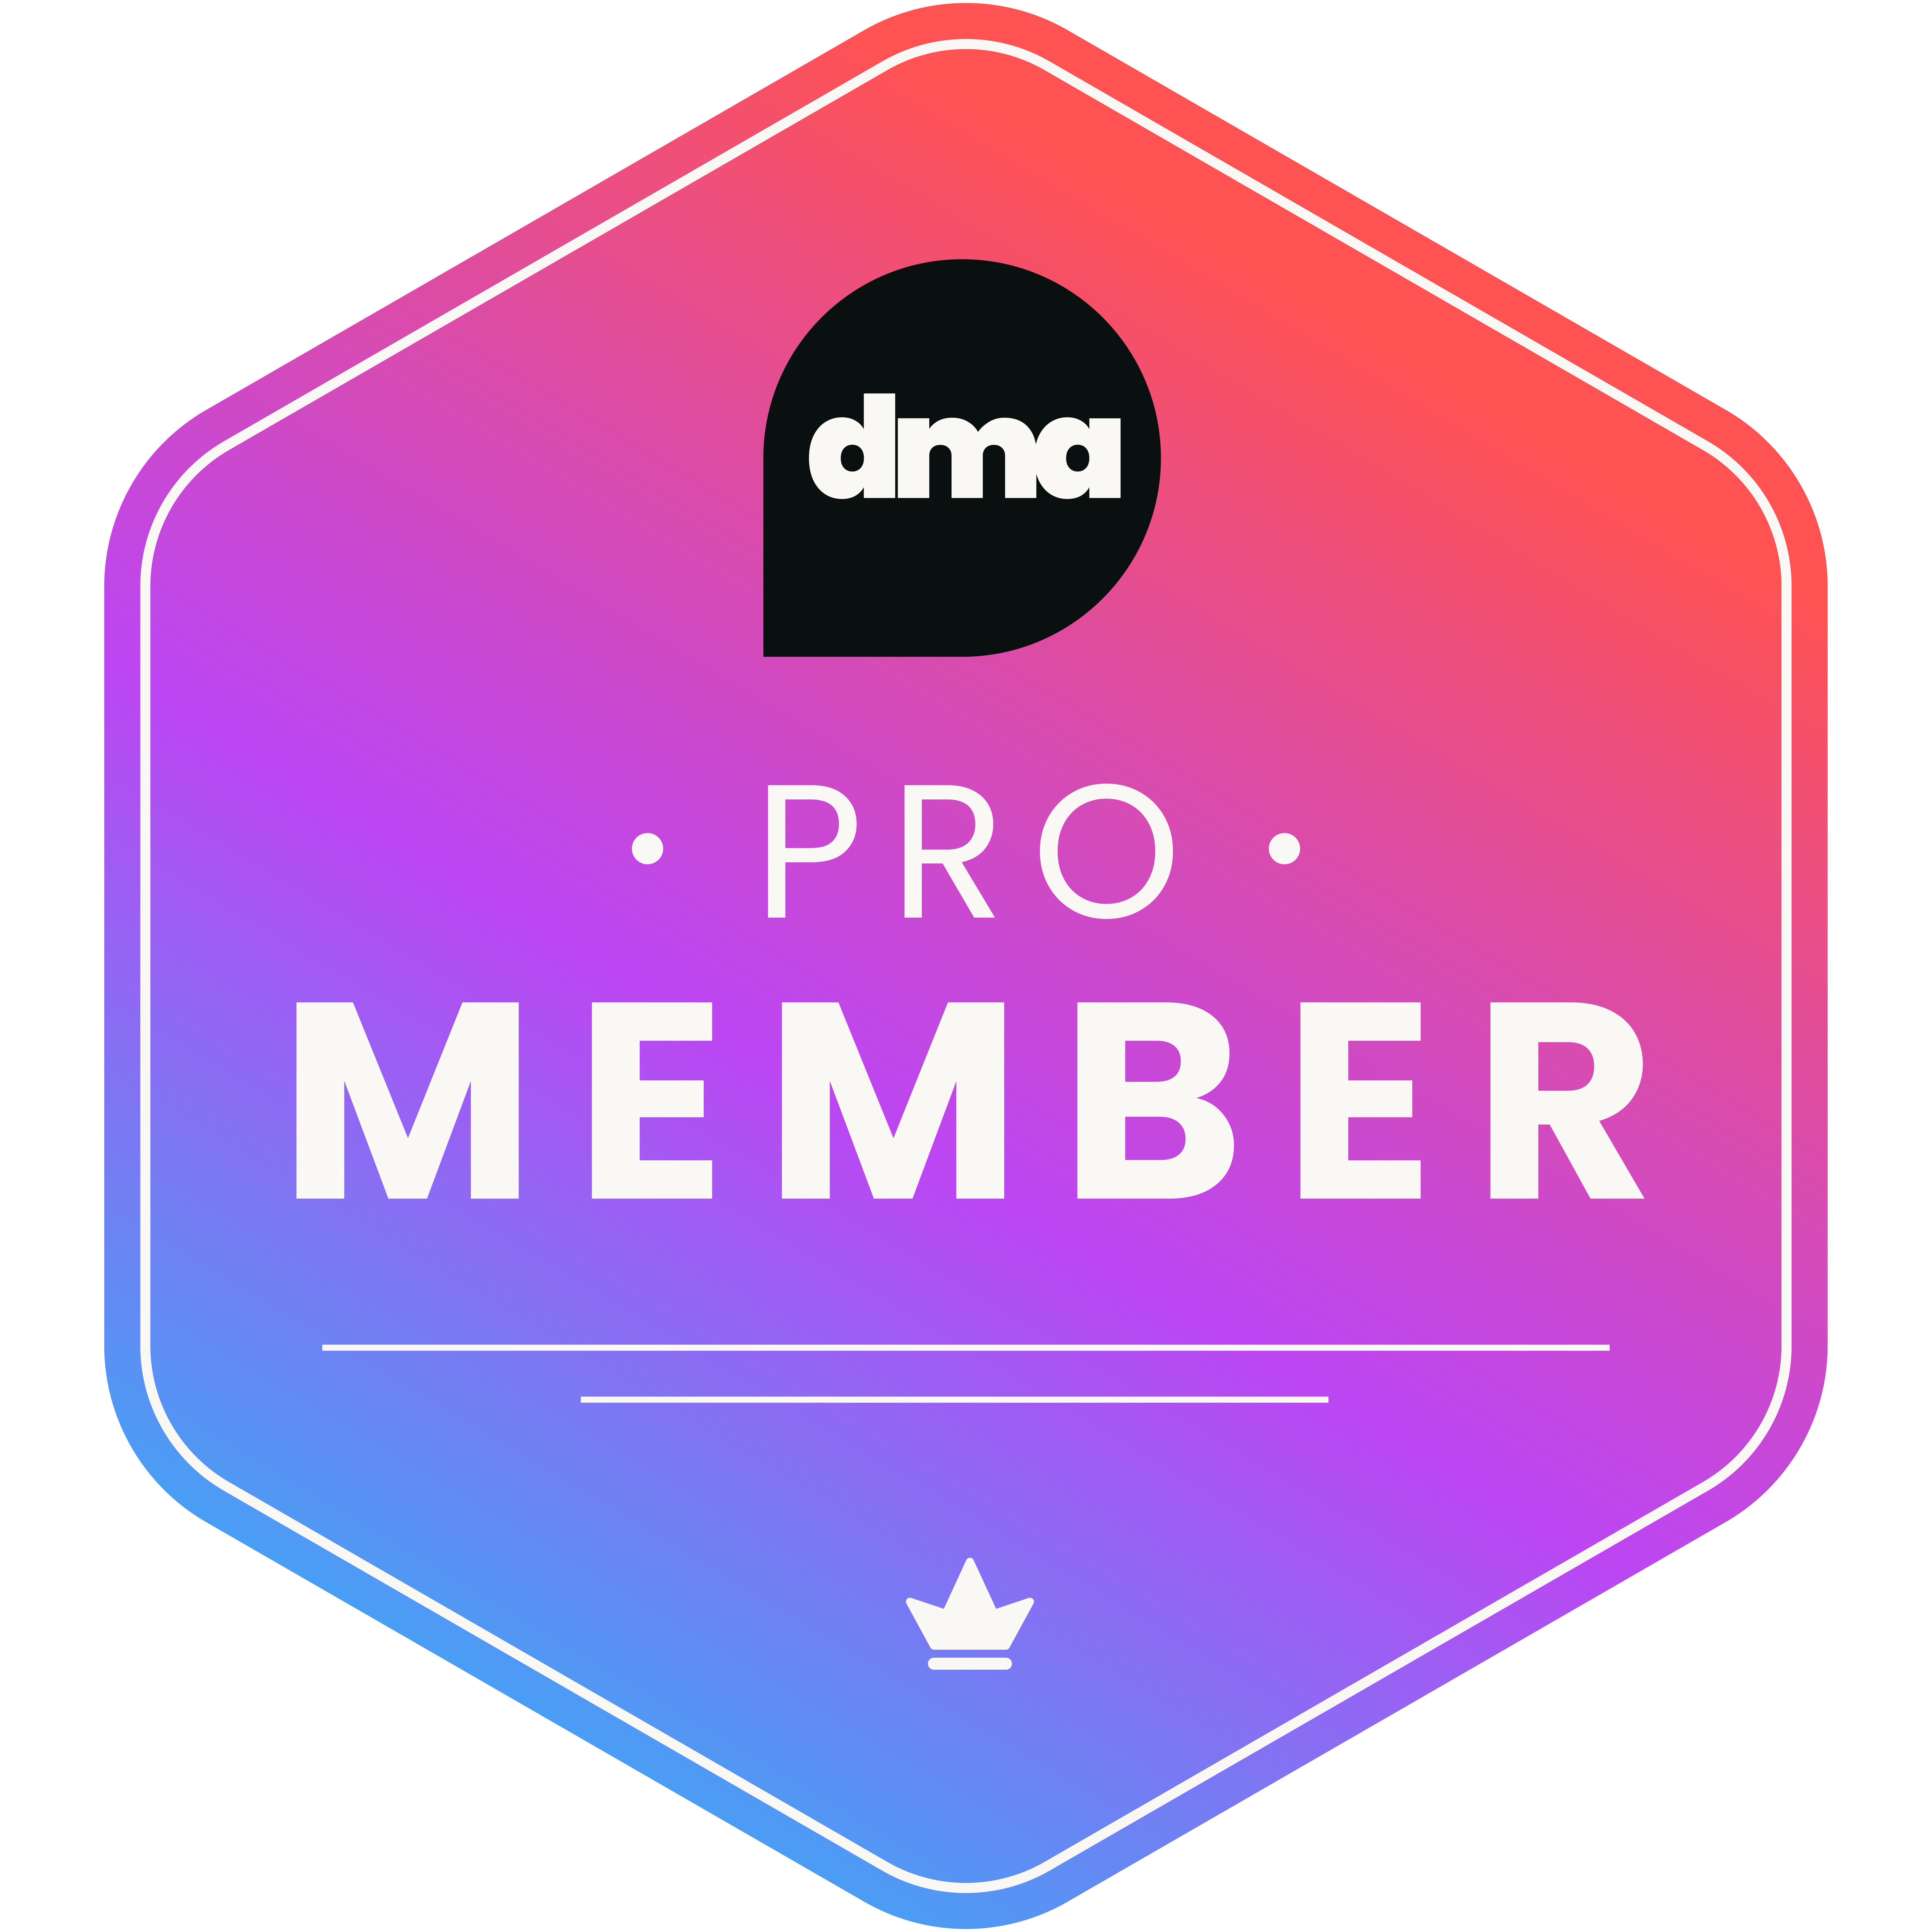 Developer marketing alliance pro membership badge